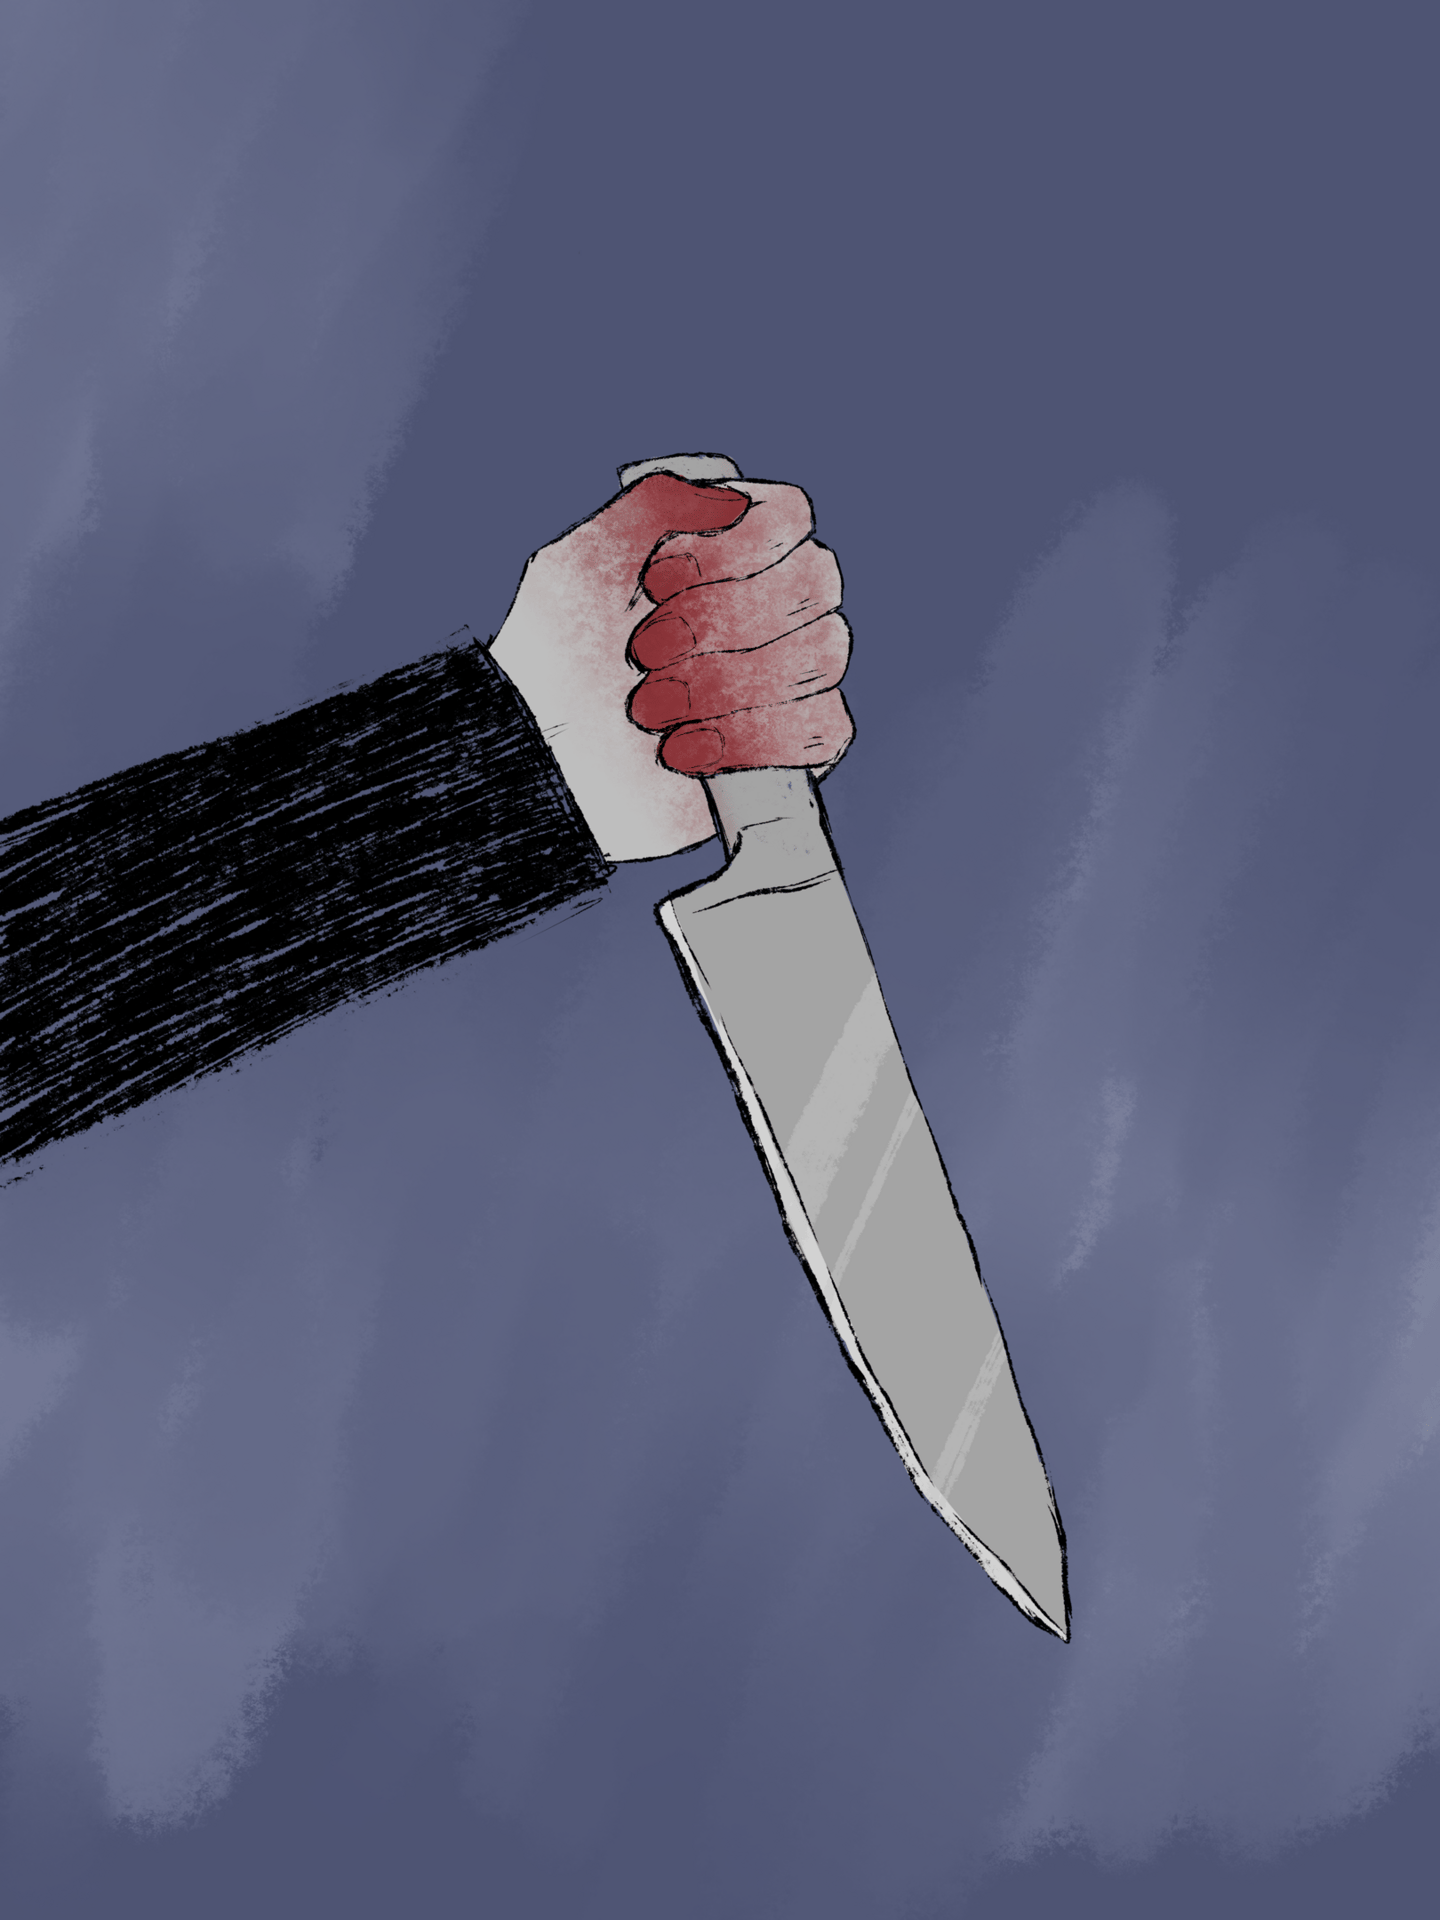 Hunting knife, Kitchen utensil, Gesture, Cloud